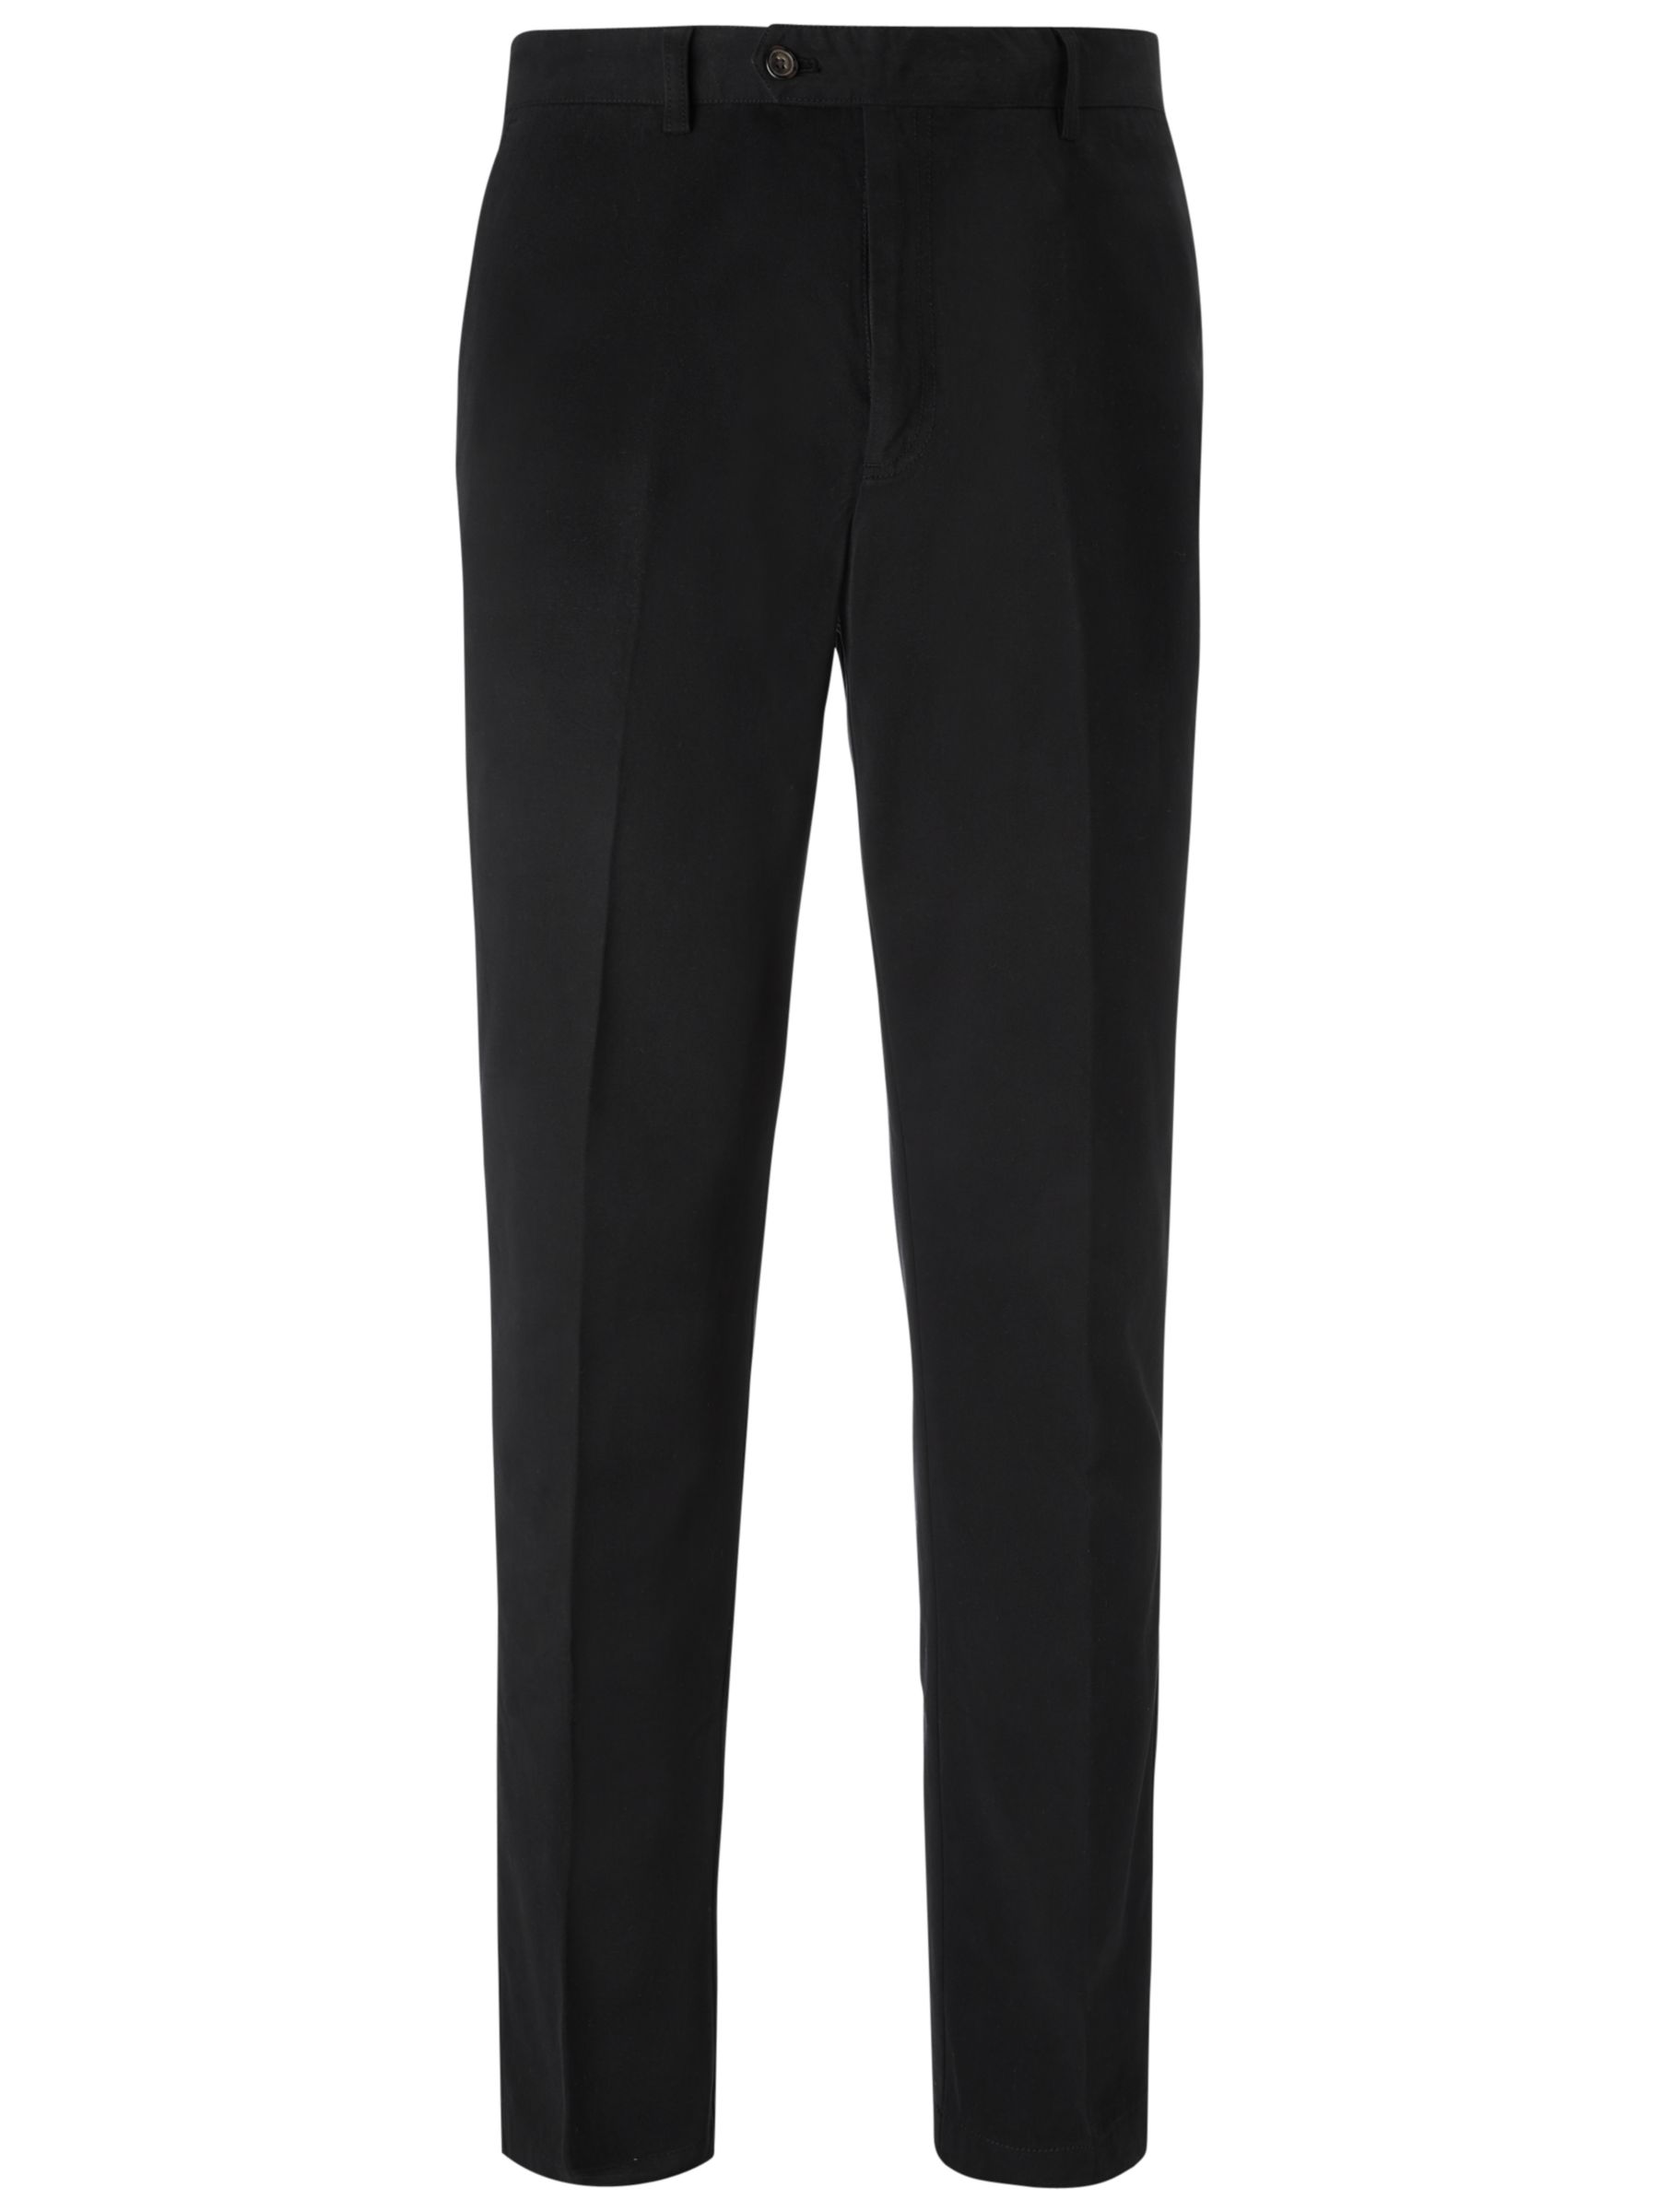 John Lewis & Partners Wrinkle Free Flat Front Trousers, Black, 32S